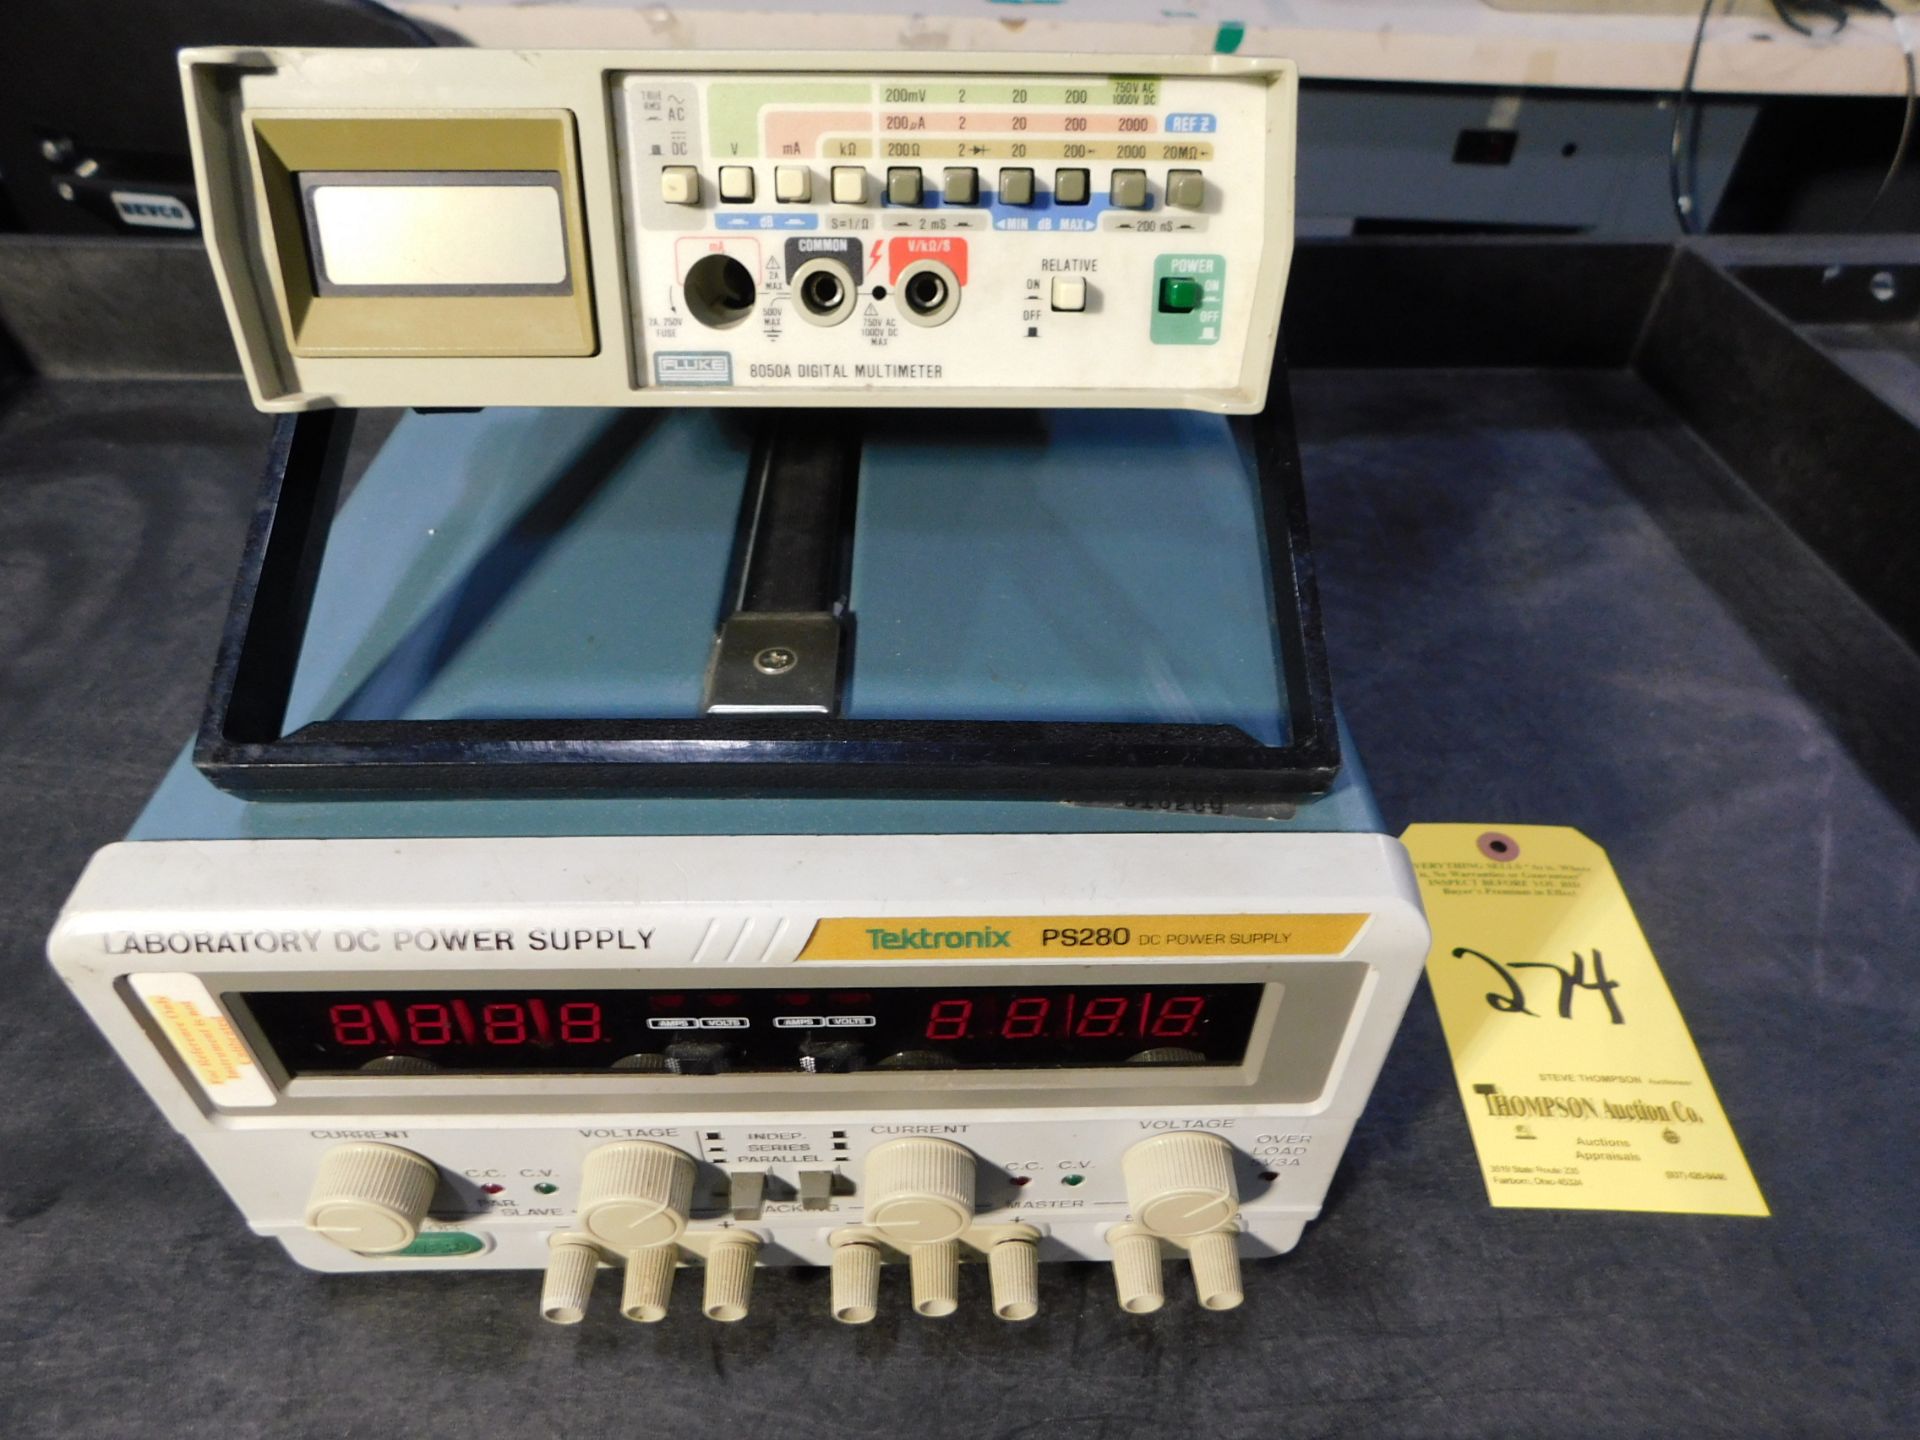 Tektonix Model PS280 DC Power Supply, Fluke 8050A Digital Multimeter